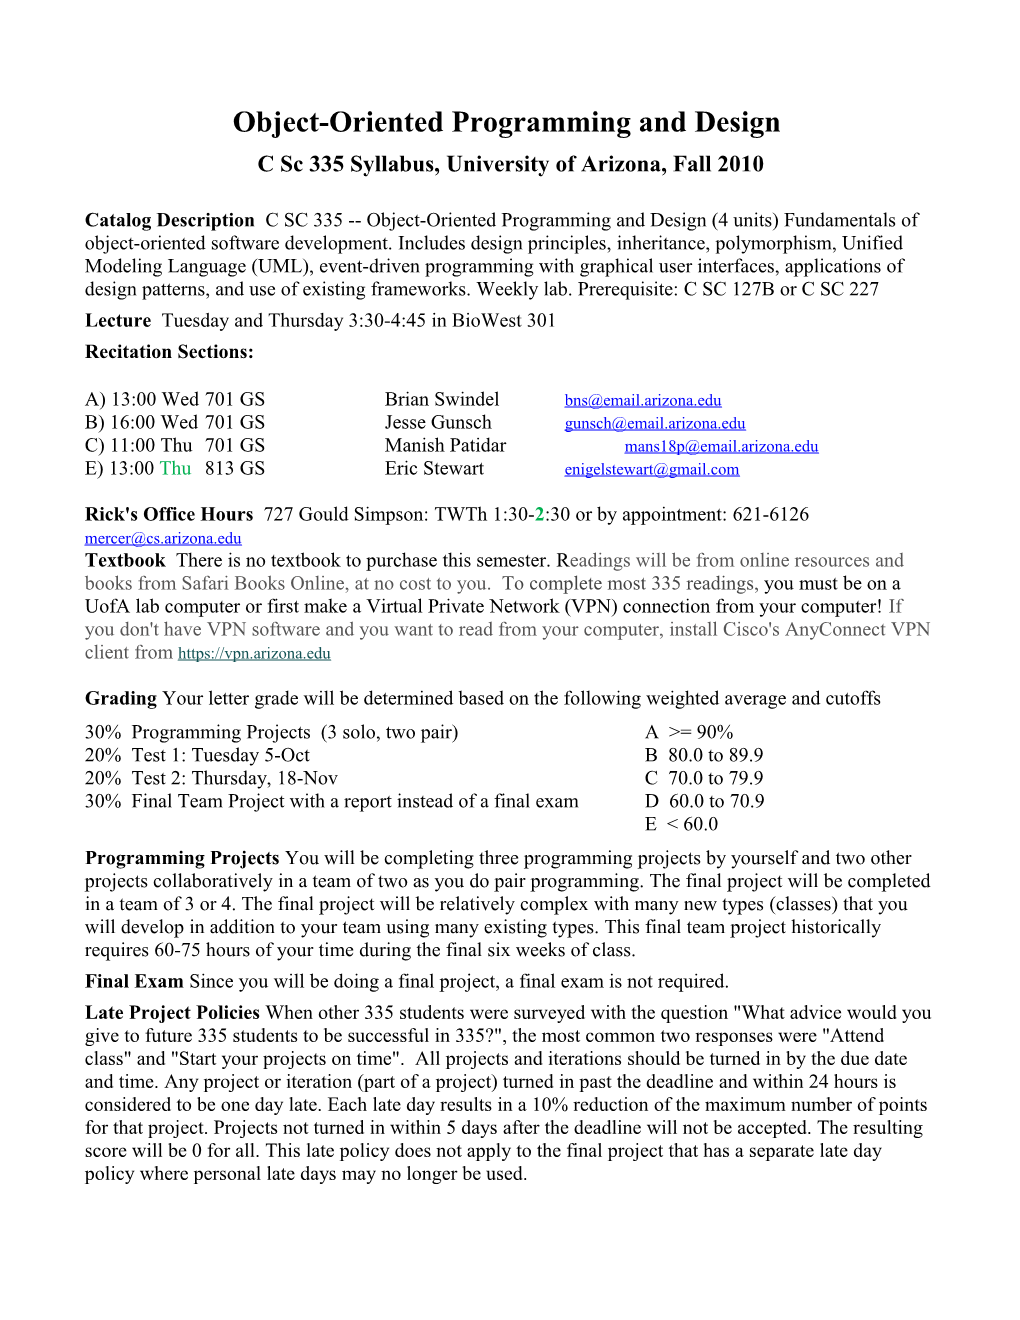 Object-Oriented Programming and Design C Sc 335 Syllabus,University of Arizona, Fall 2010